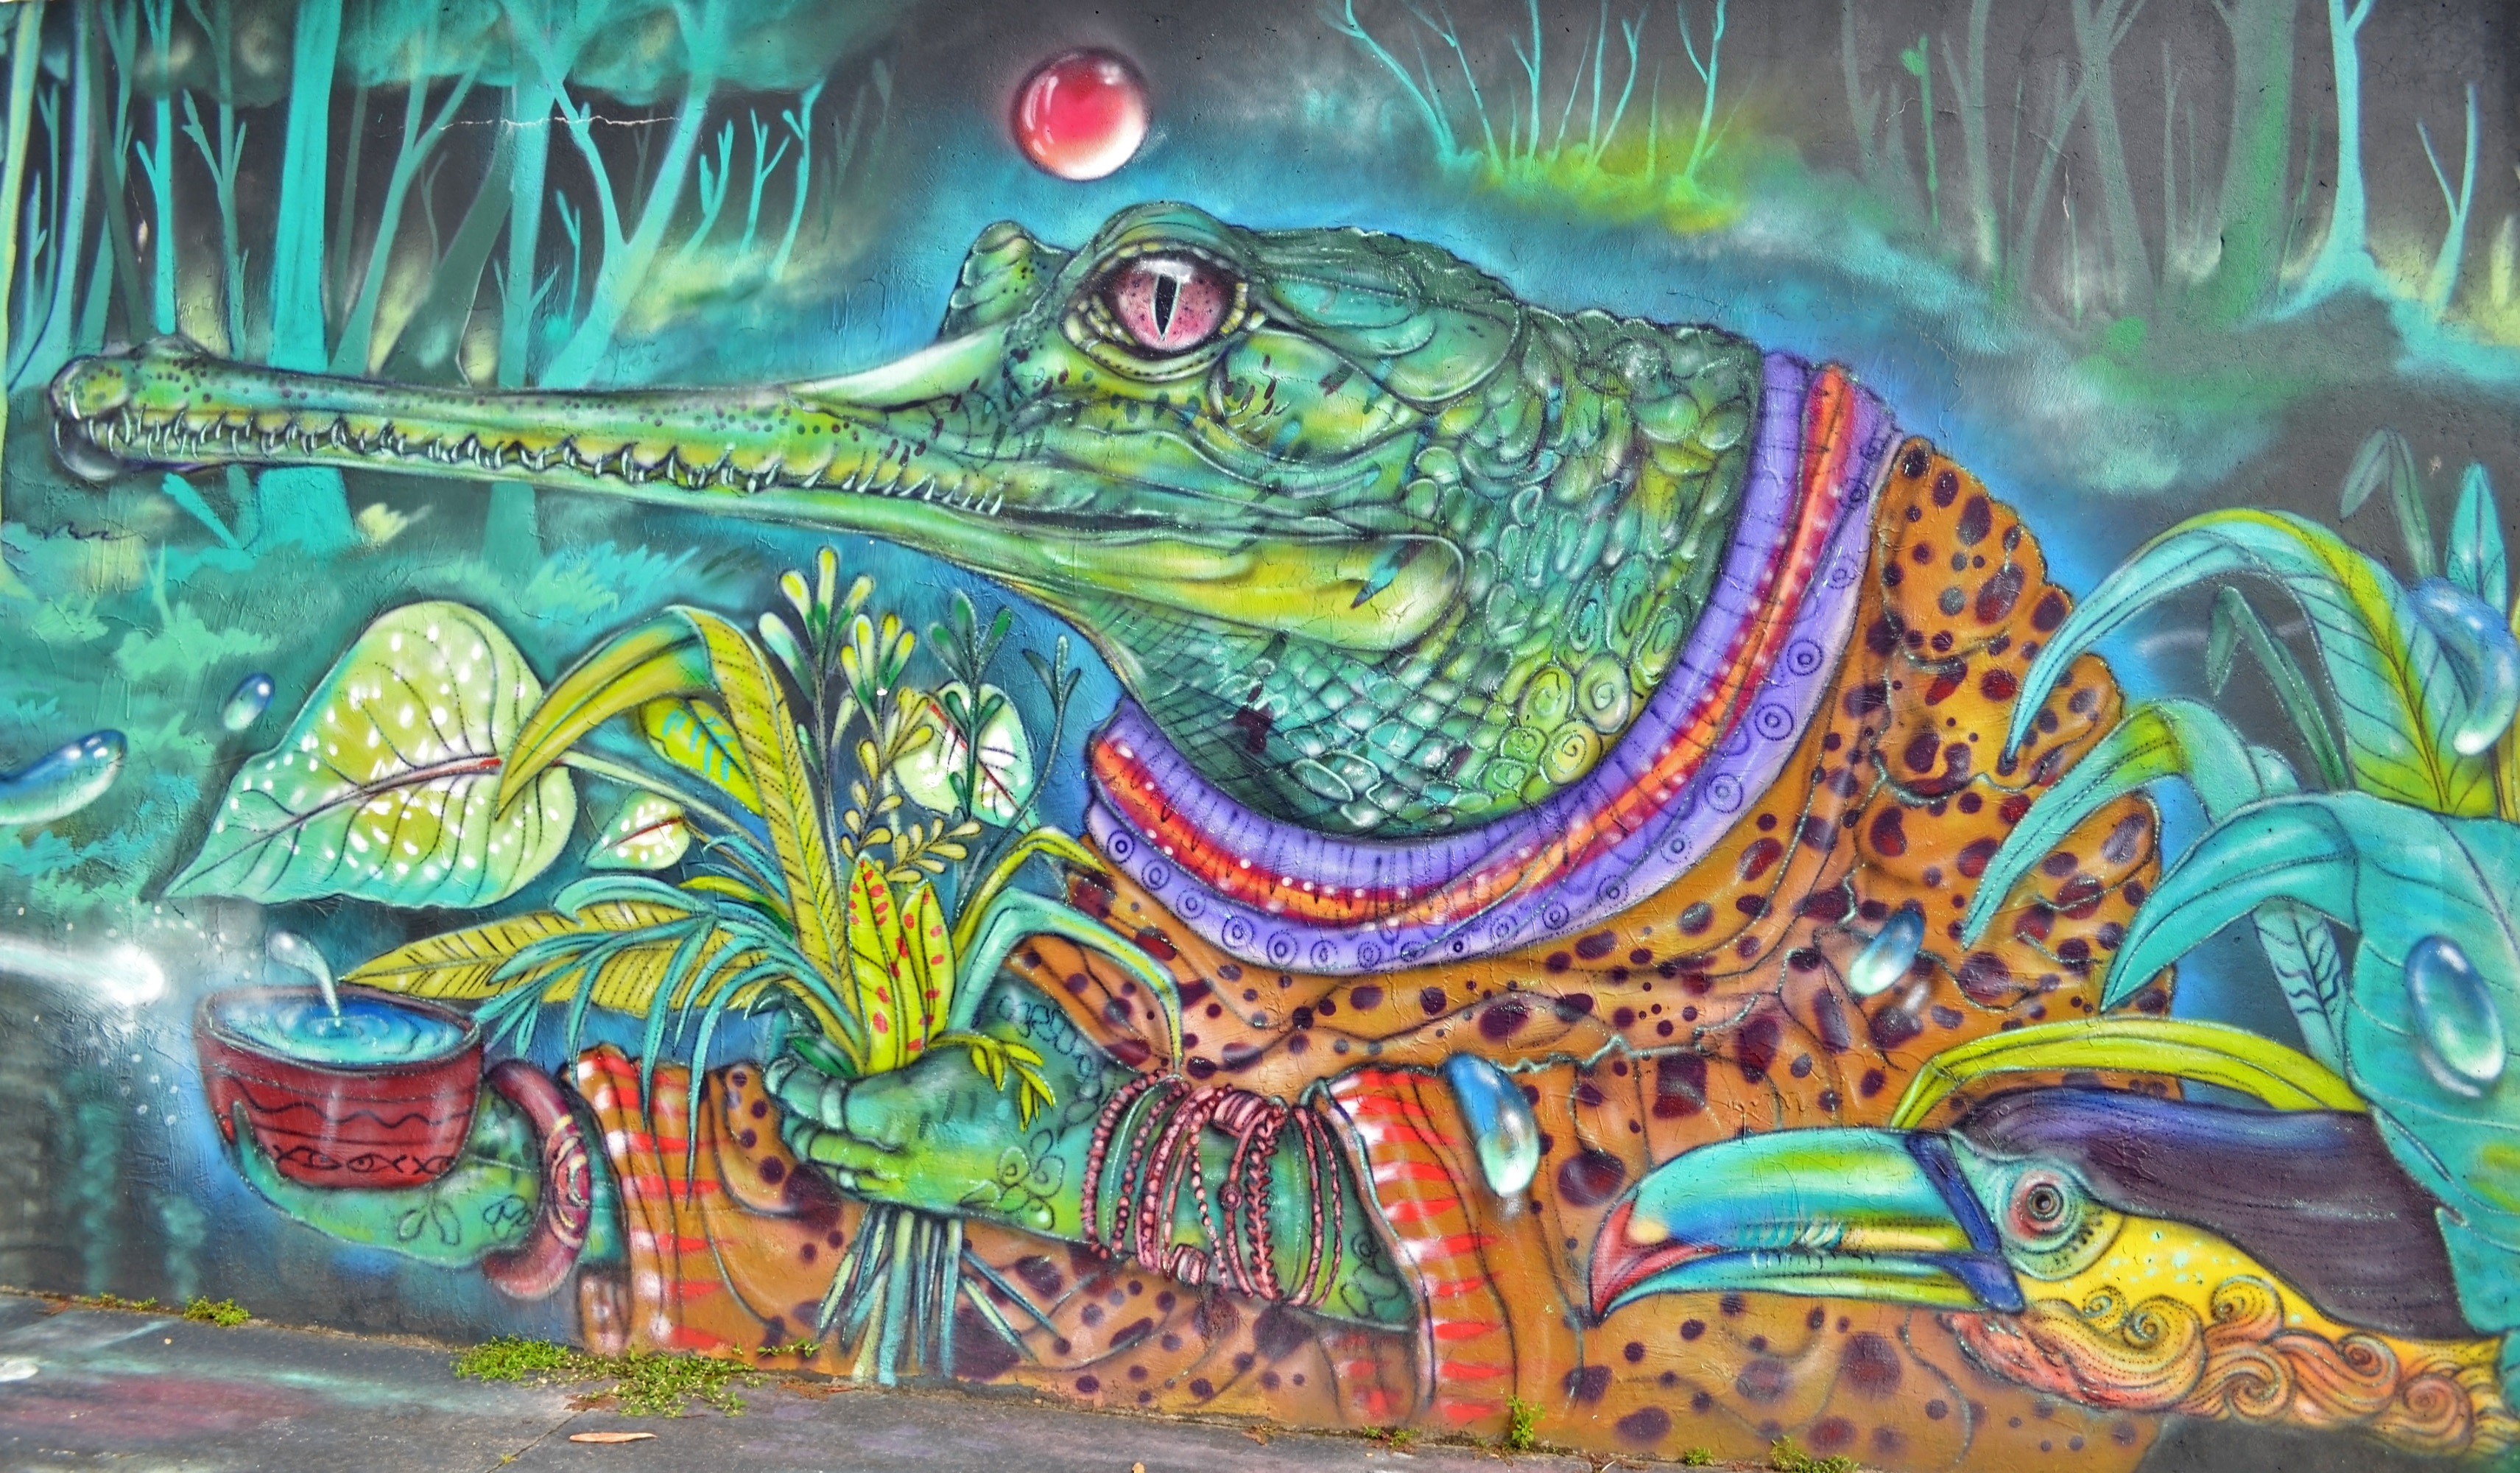 artistic, graffiti, alligator, urban art